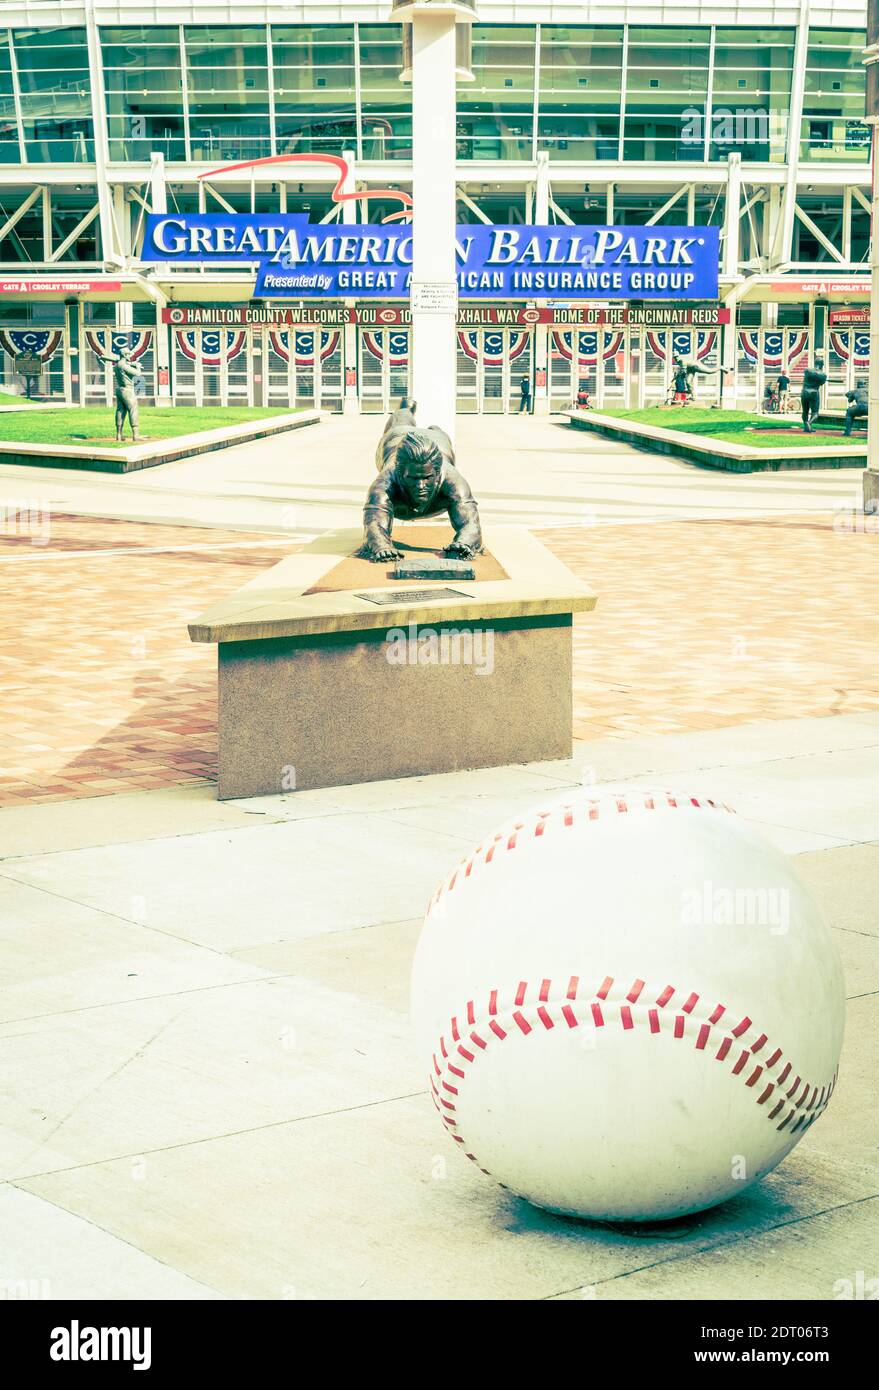 Cincinnati, Ohio, 29. August 2020: Pete Rose Statue vor dem Great American Ball Park Stadion, dem Heimstadion des Baseballteams Cincinnati Reds Stockfoto